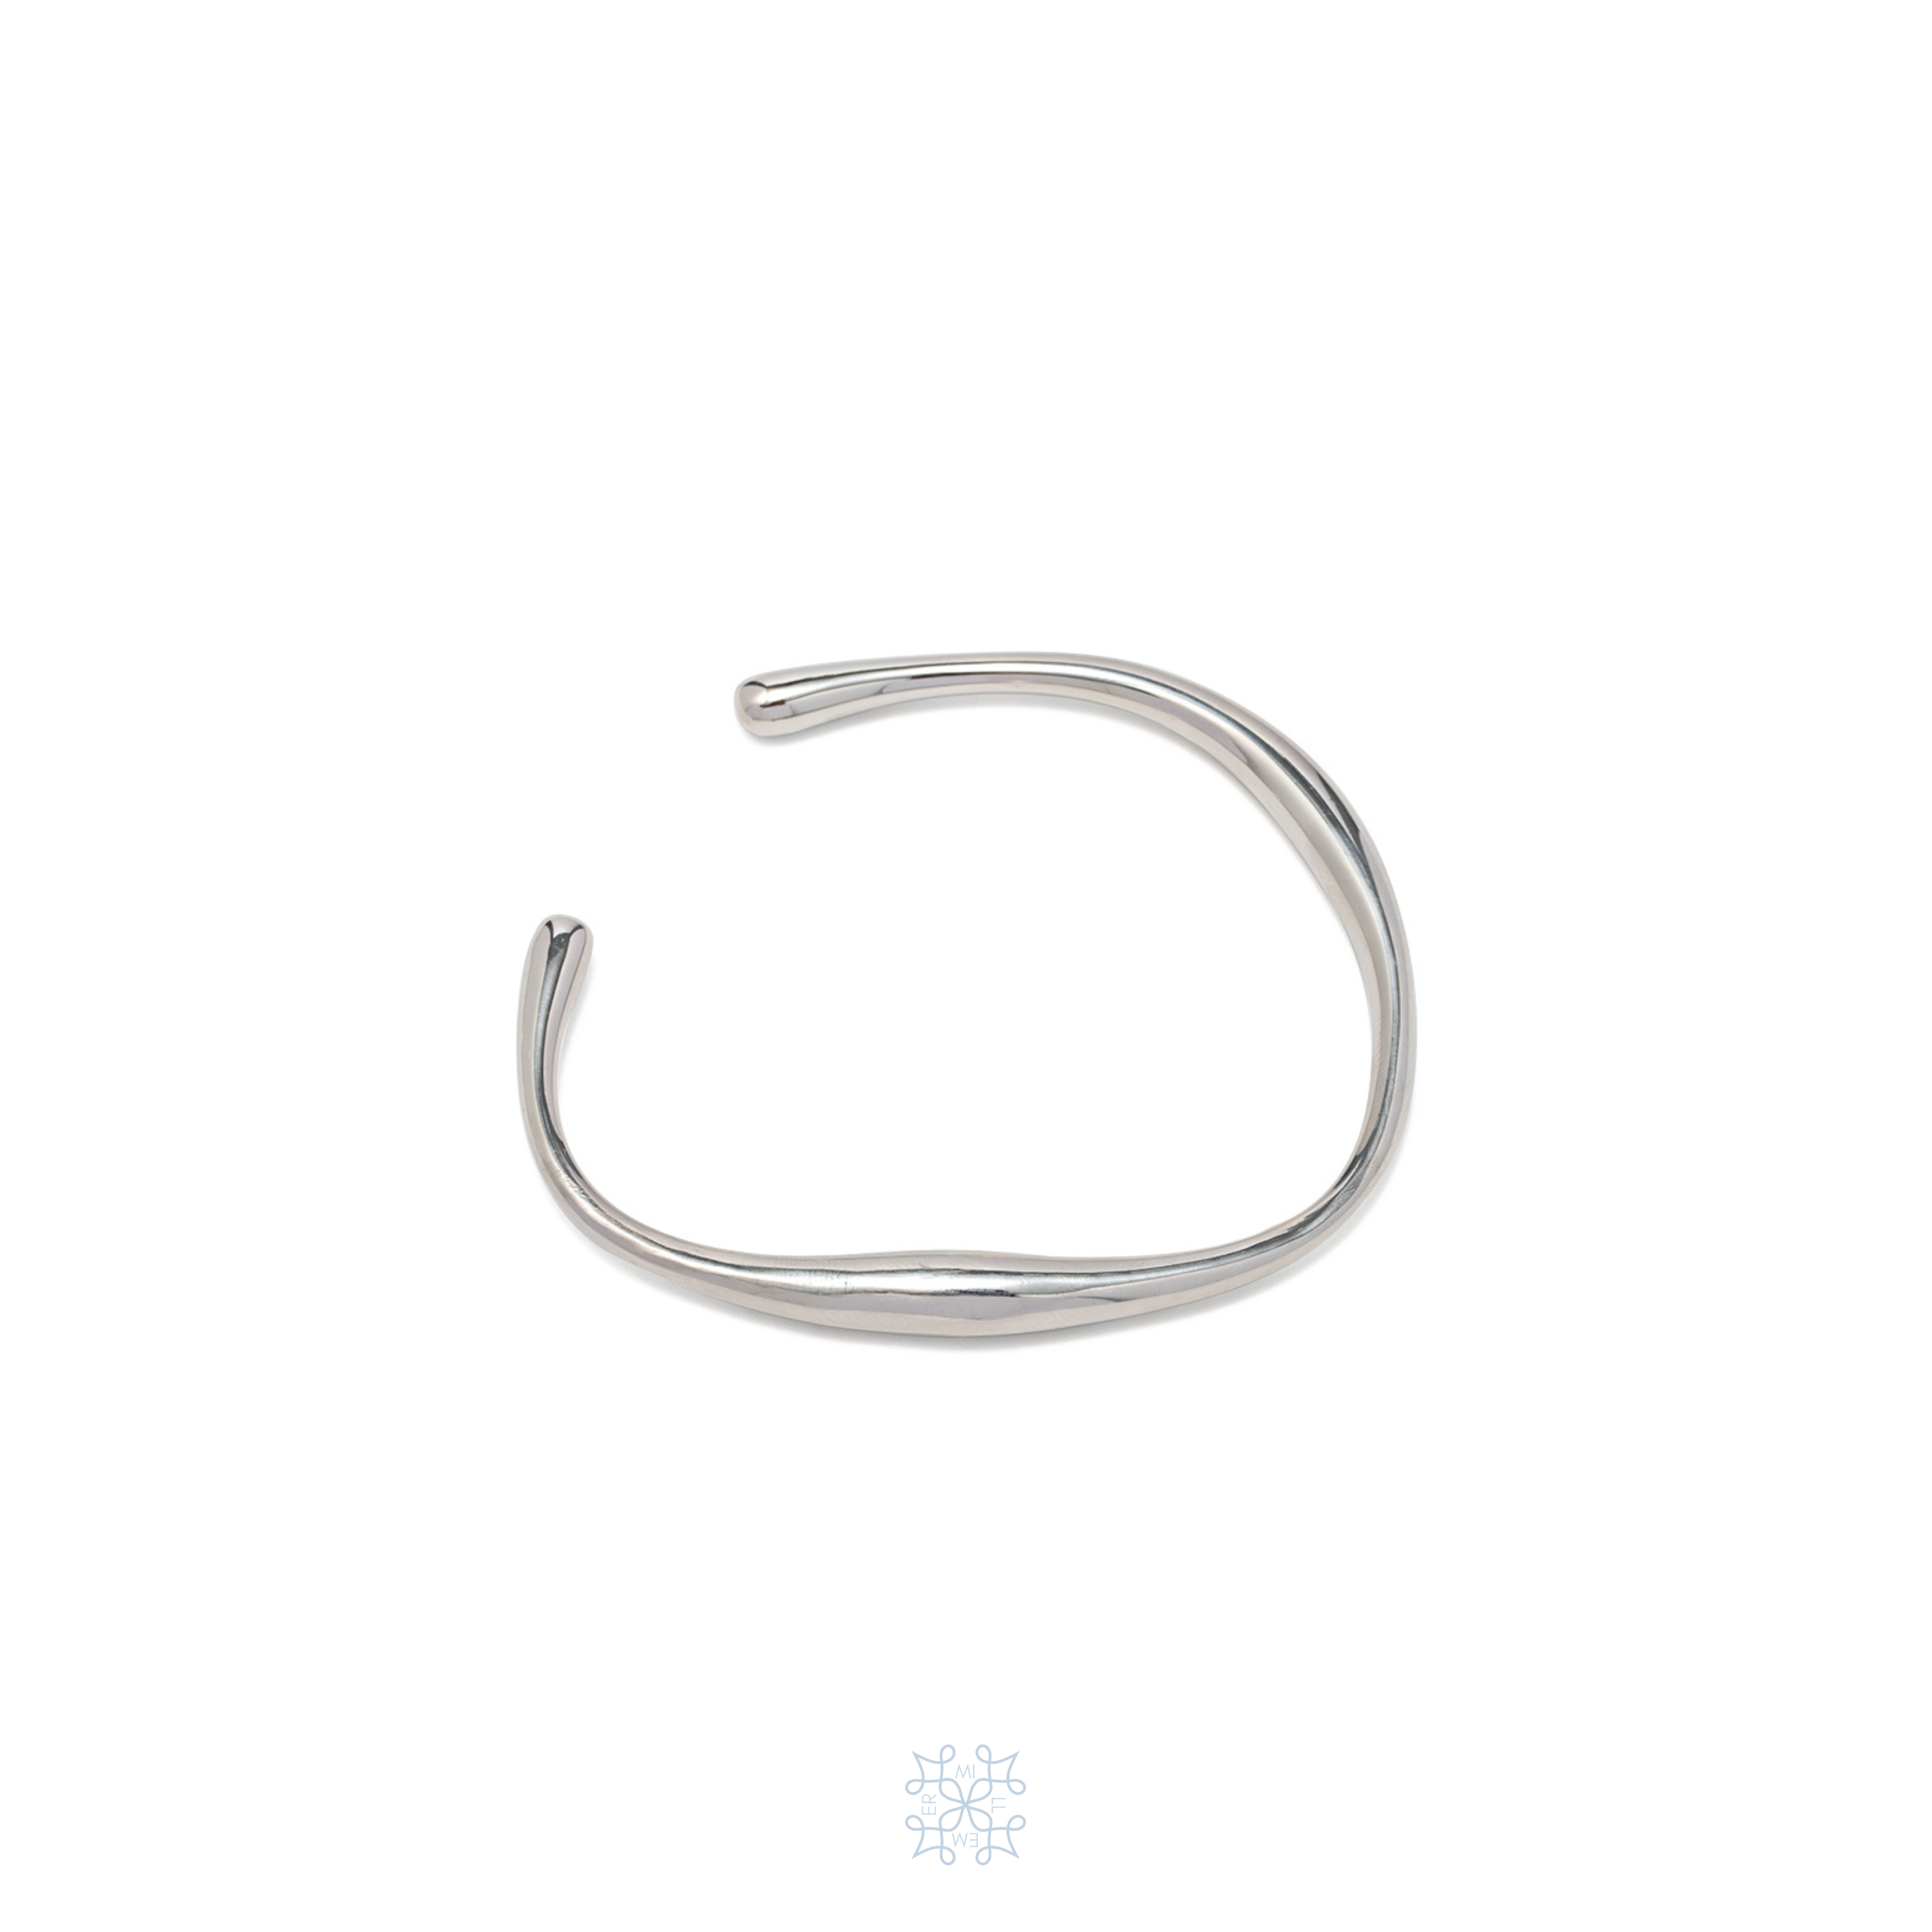 Ray silver cuff bracelet. Irregular shape. shiny silver surface.